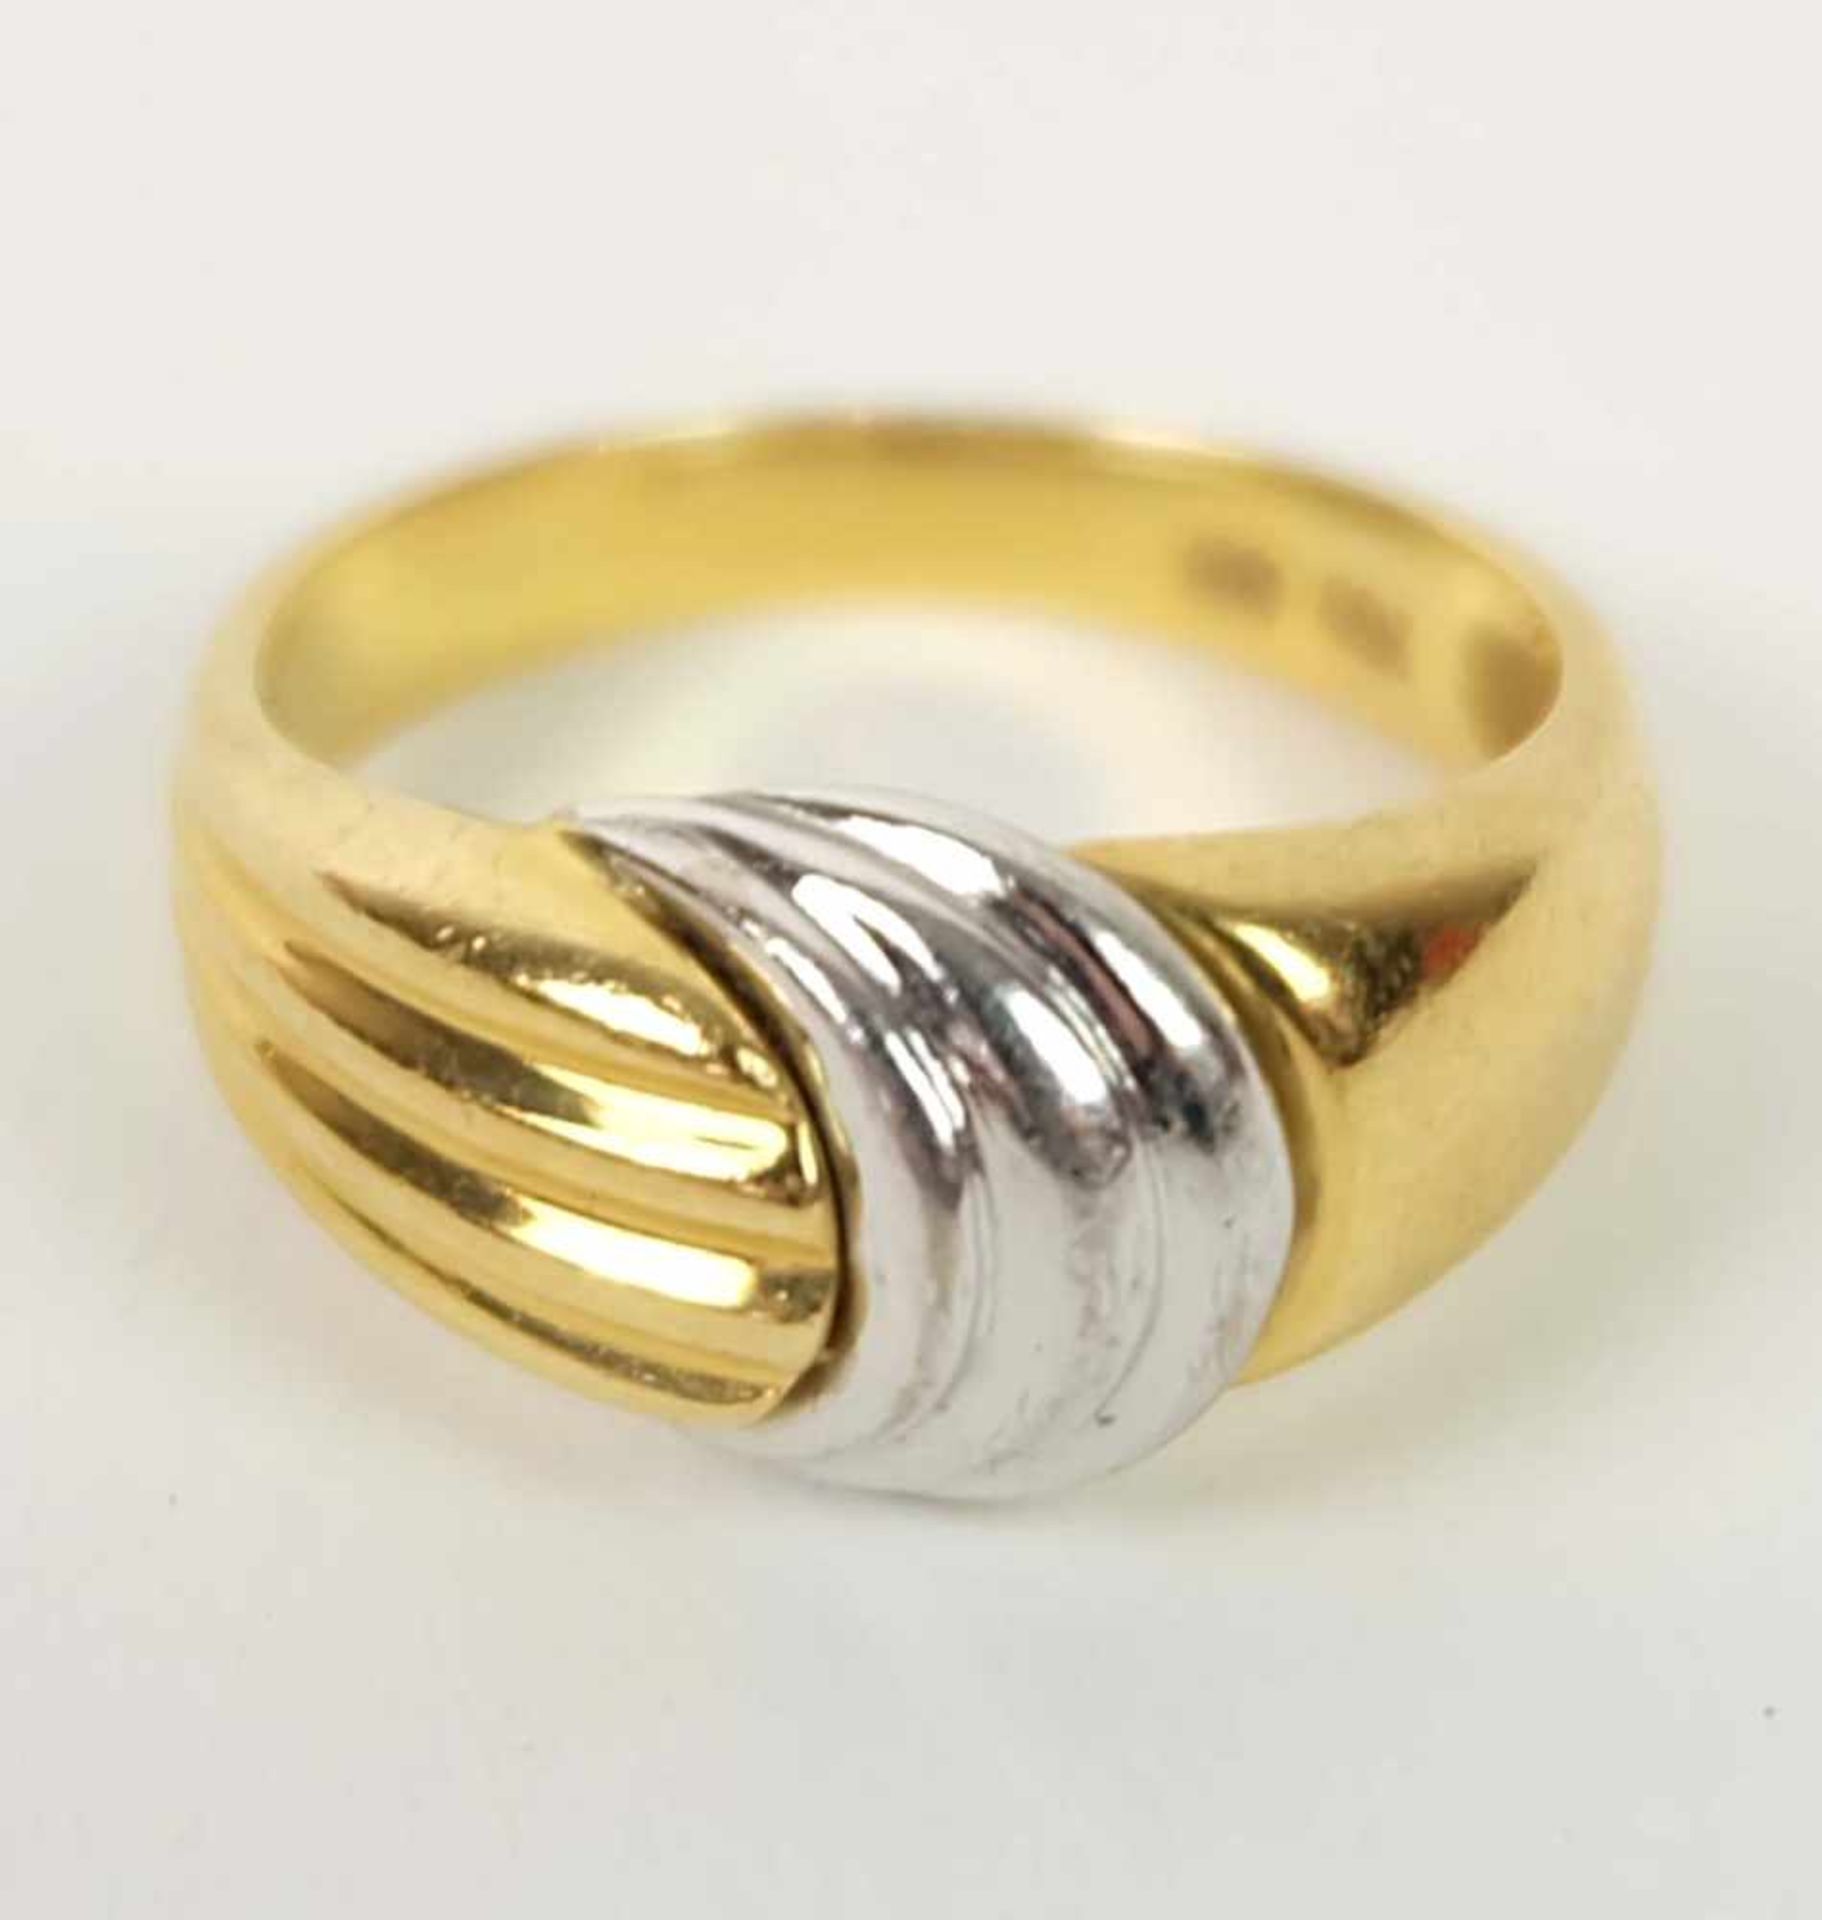 RING, 750er-Bicolor-Gold, ca. 5,14g, MZ, Beschau, Dm 1,6 cm